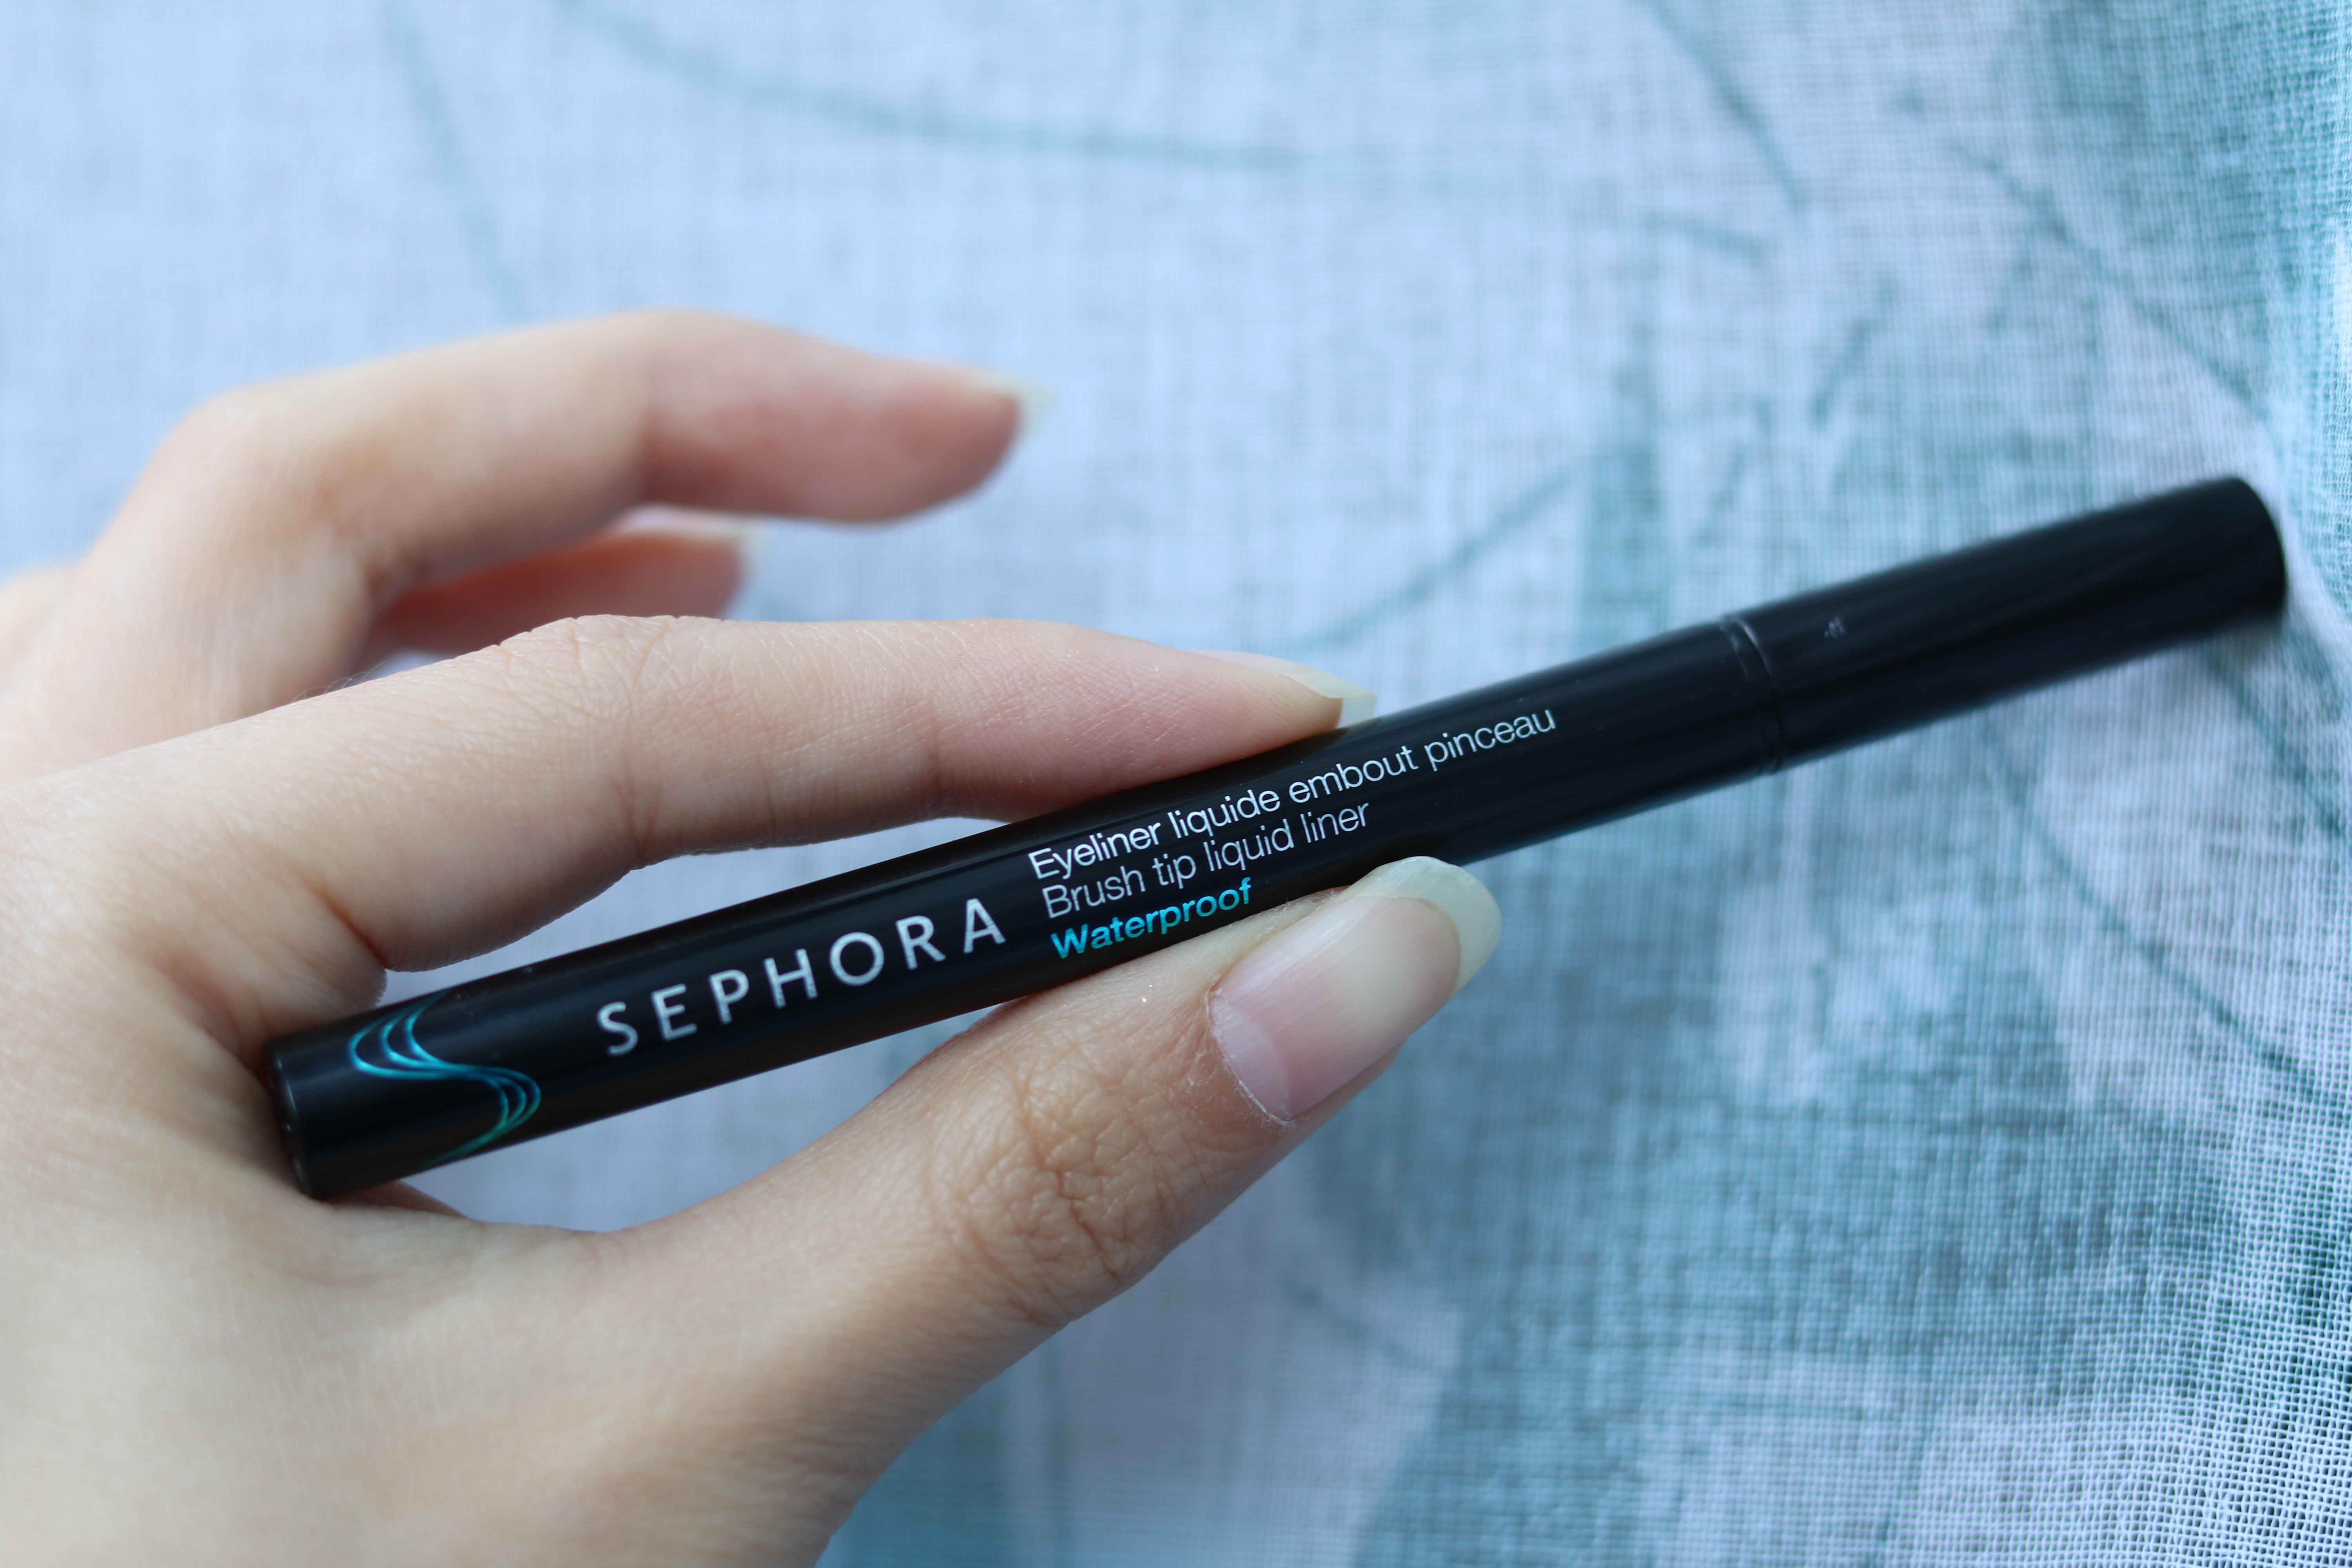 Review: Sephora Hot Line Brush Tip Liquid Liner - I'm Not a Beauty Guru